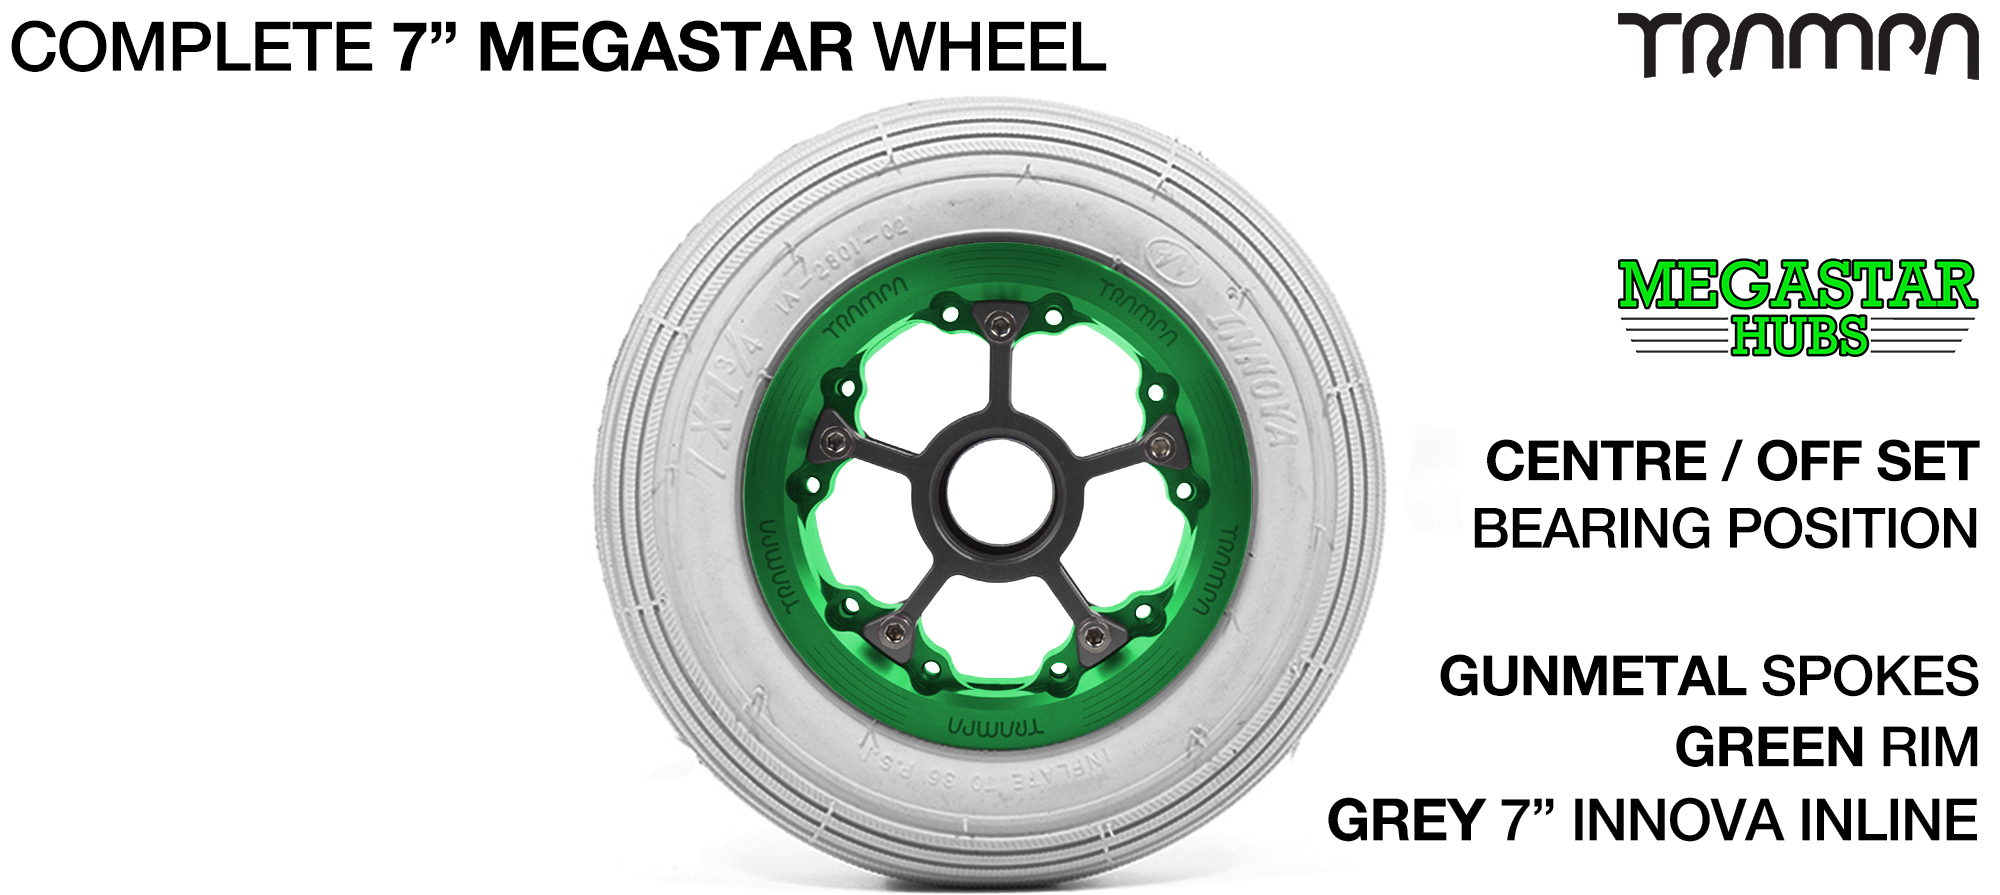 GREEN MEGASTAR Rims with GUNMETAL Spokes & 7 Inch Tyres